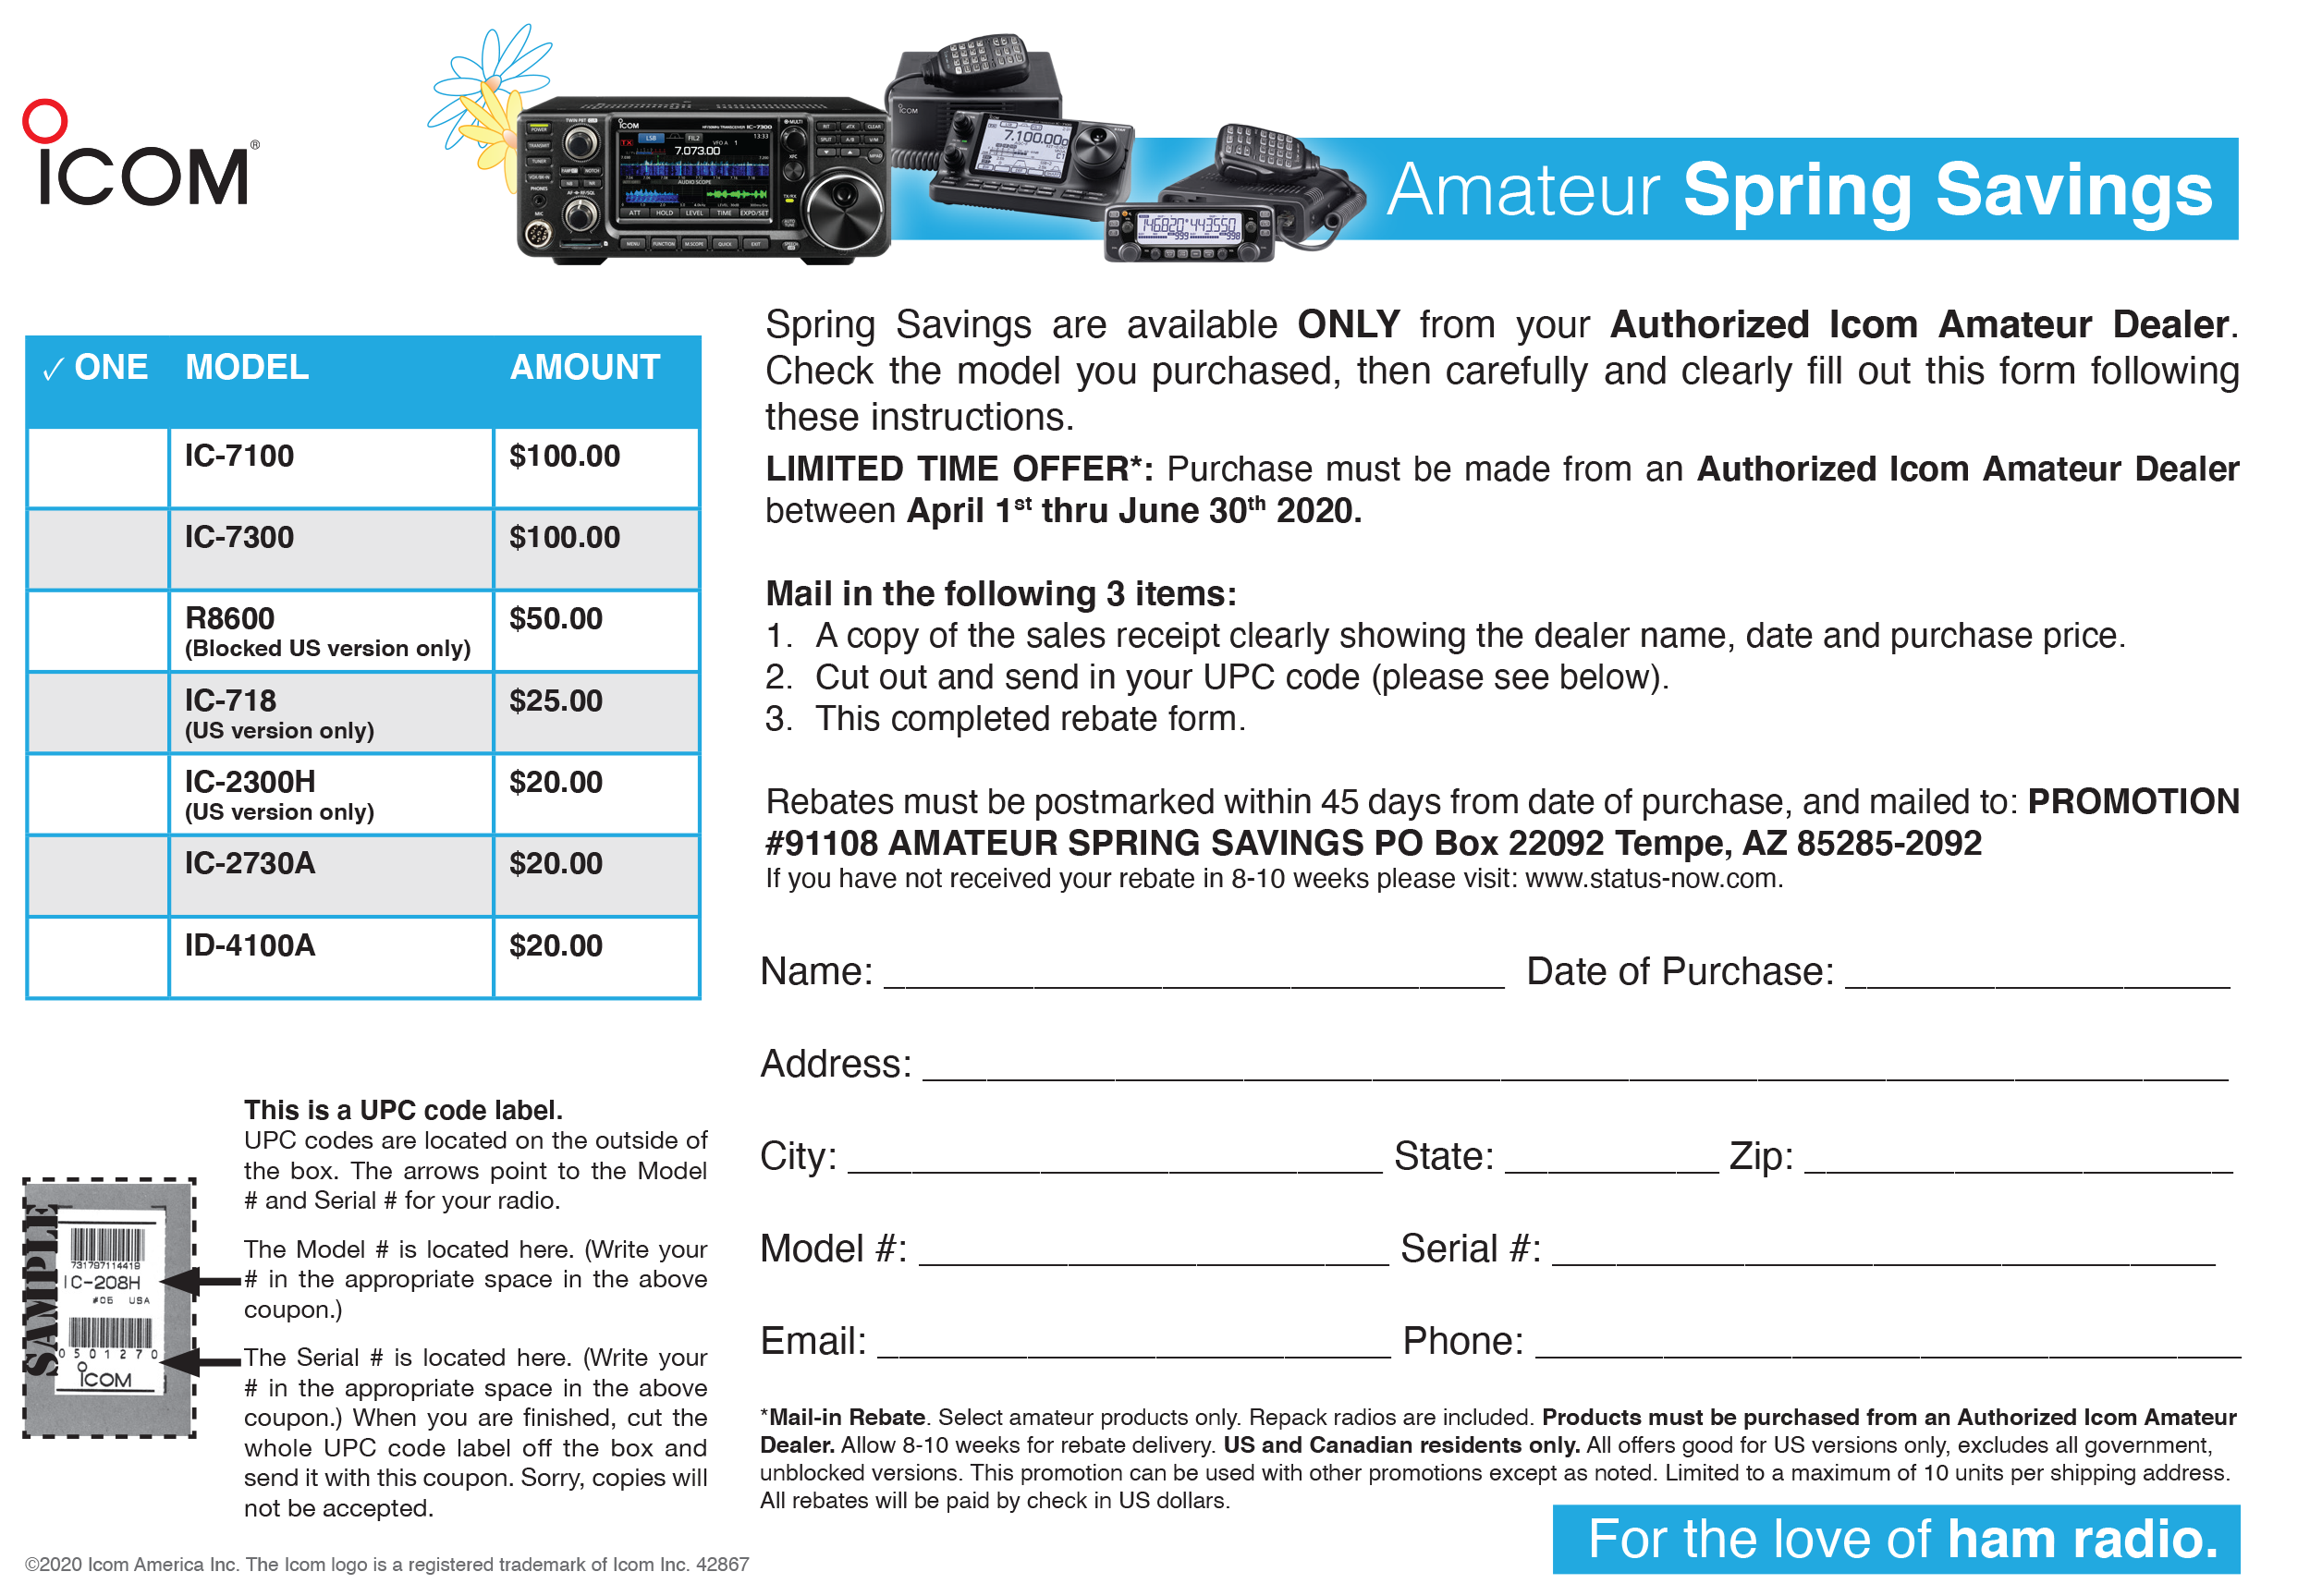 icom-amateur-spring-savings-rebate-2020-radioworld